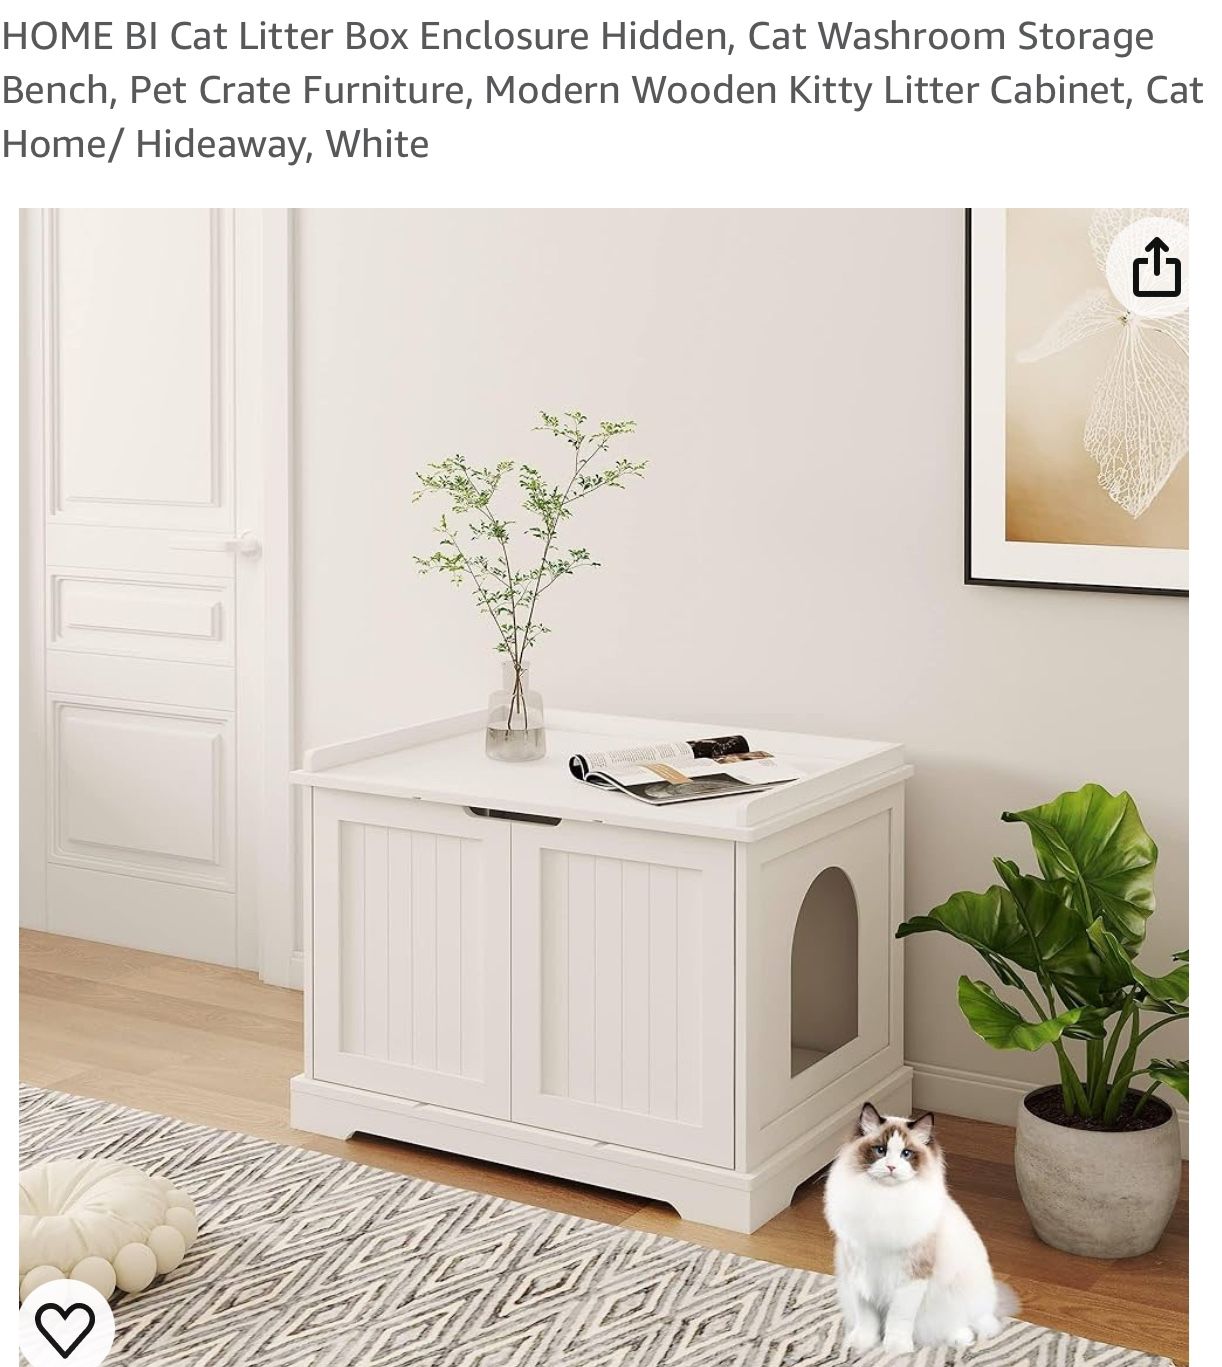 HOME BI Cat Litter Box Enclosure Hidden, Cat Washroom Storage Bench, Pet Crate Furniture, Modern Wooden Kitty Litter Cabinet, Cat Home/ Hideaway, Whit